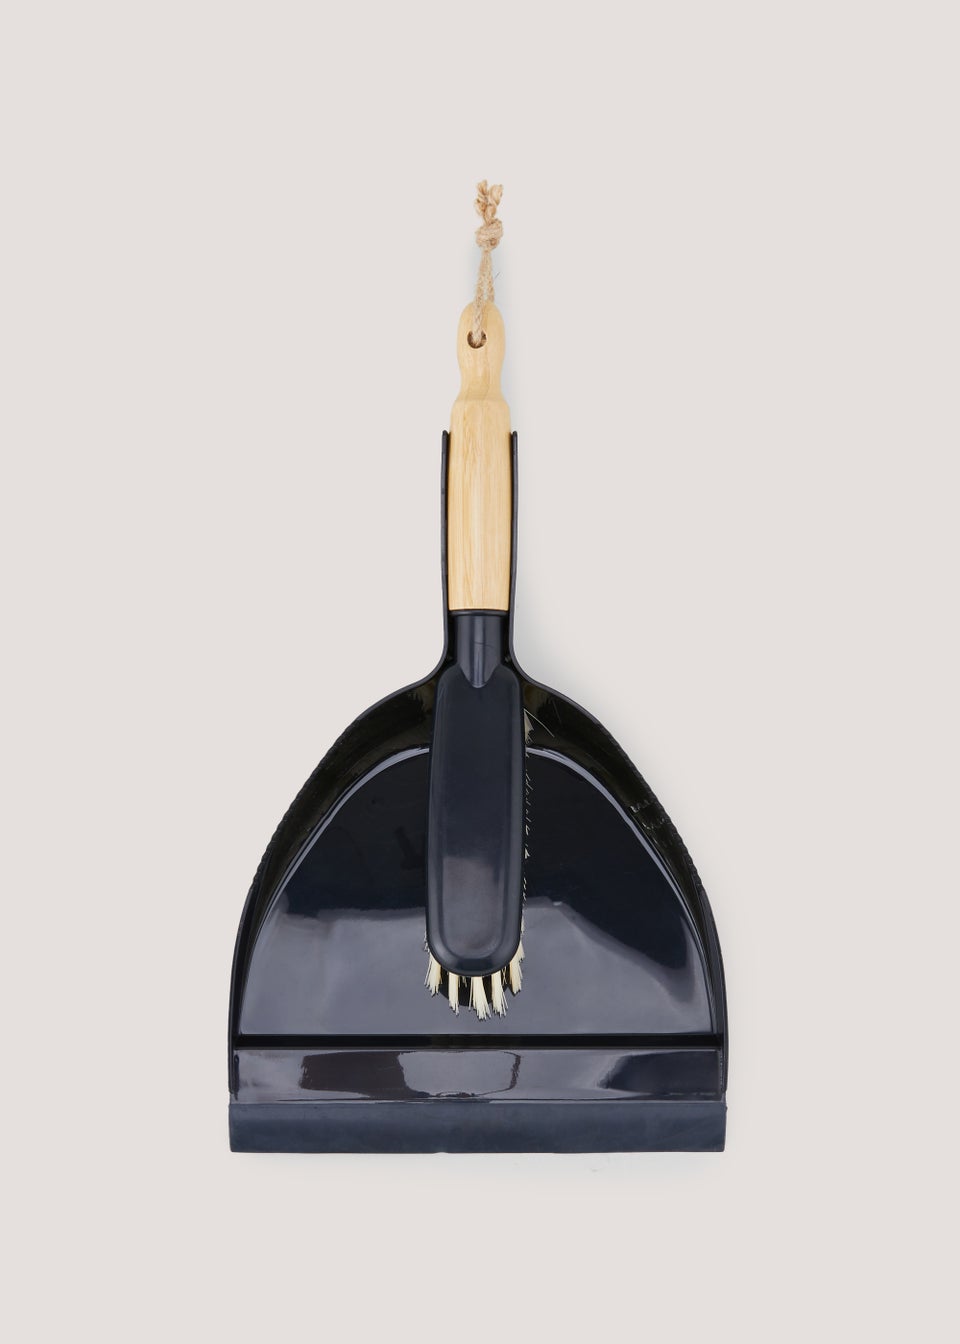 Black Plastic Dustpan & Brush Set (31cm x 21.5cm x 6cm)